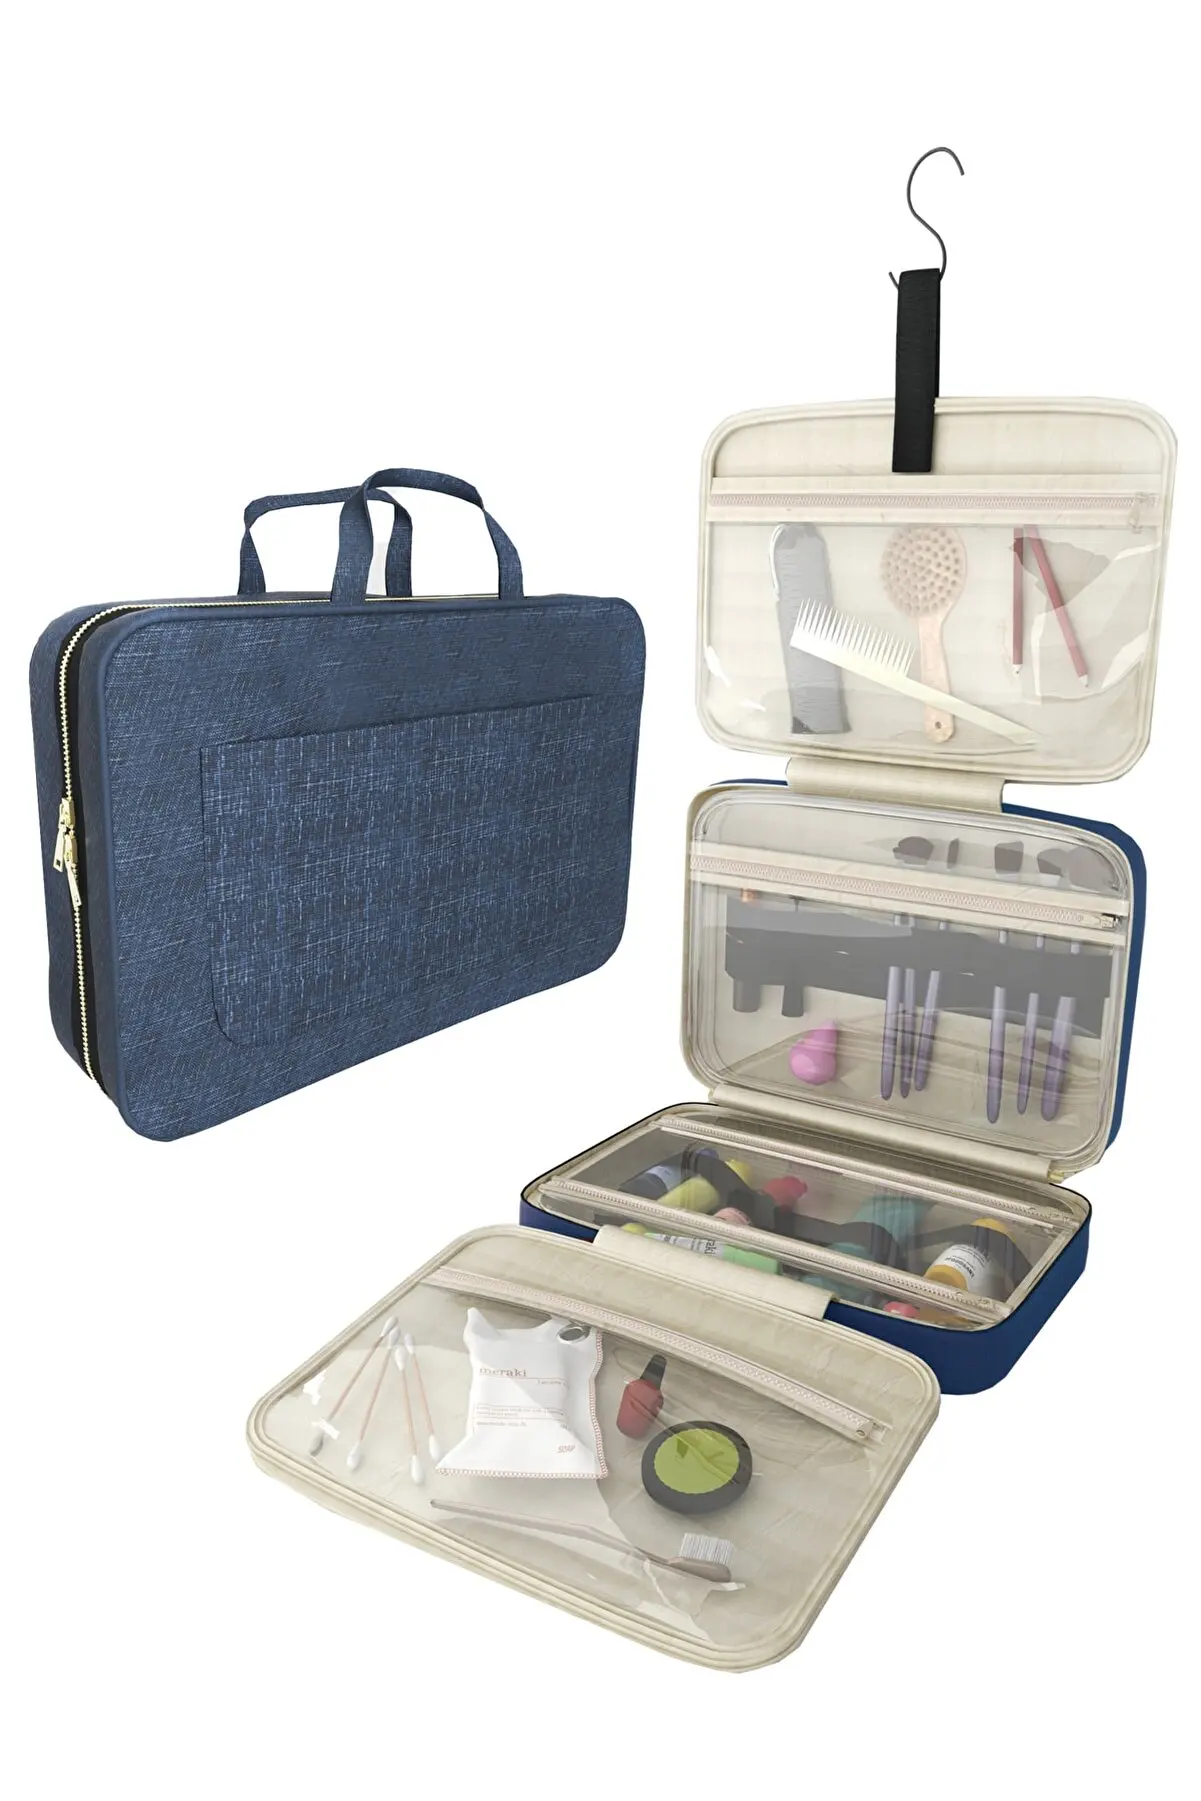 Düzenleyici In suitcase Travel Bag Makeup Suitcase Bath Bag Makeup Bag Laundry Toy Multi-Purpose Bag